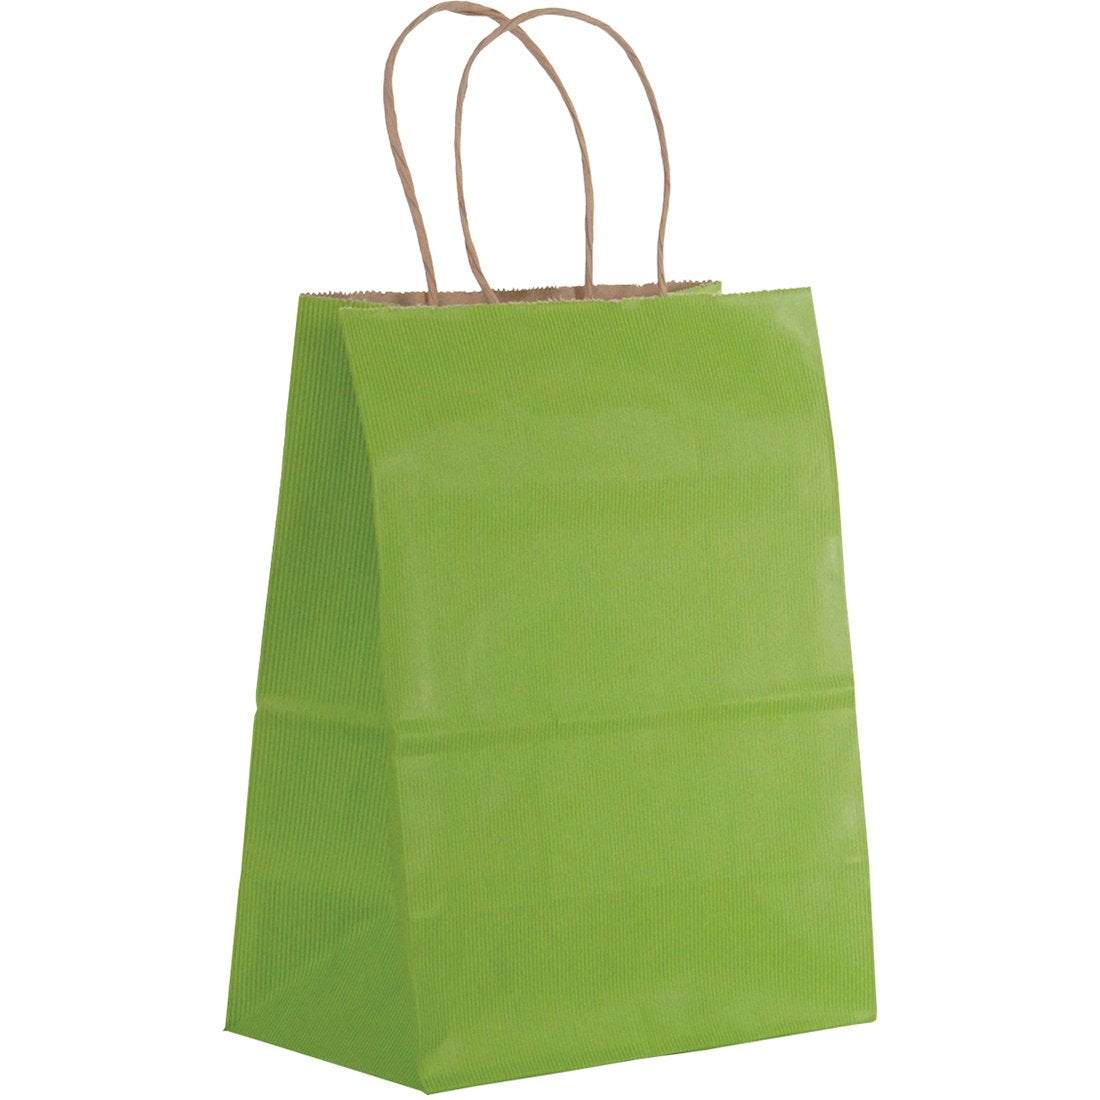 Jillson & Roberts Medium Kraft Bags, Lime